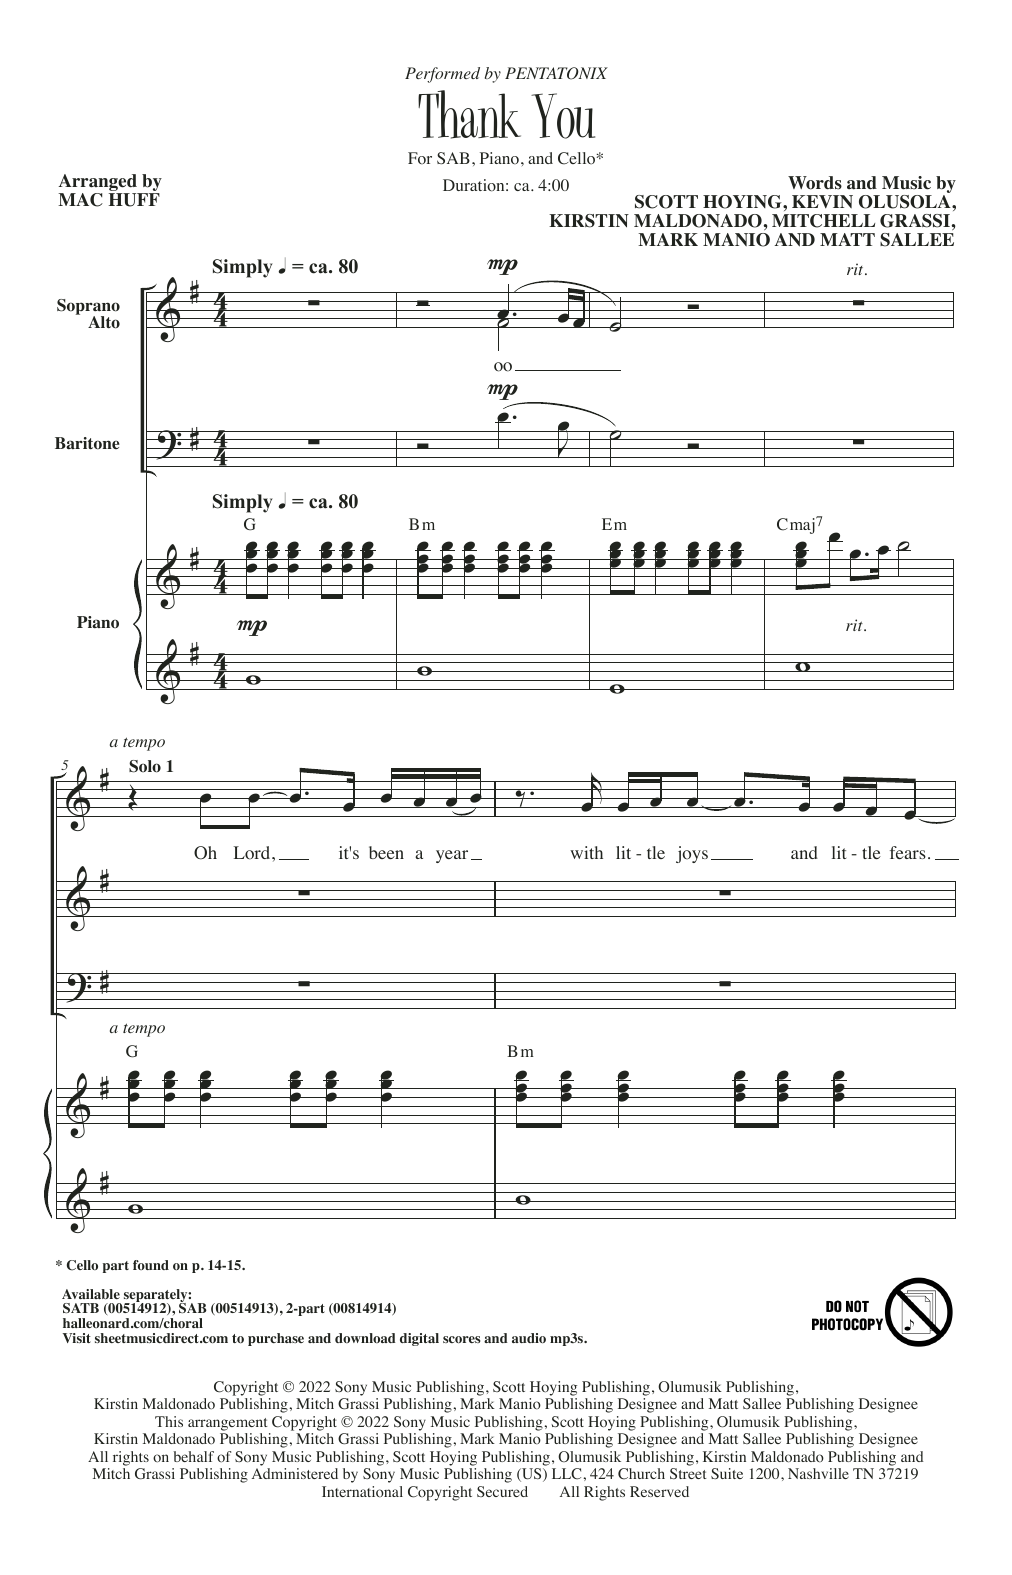 Pentatonix Thank You (arr. Mac Huff) sheet music notes and chords arranged for SAB Choir